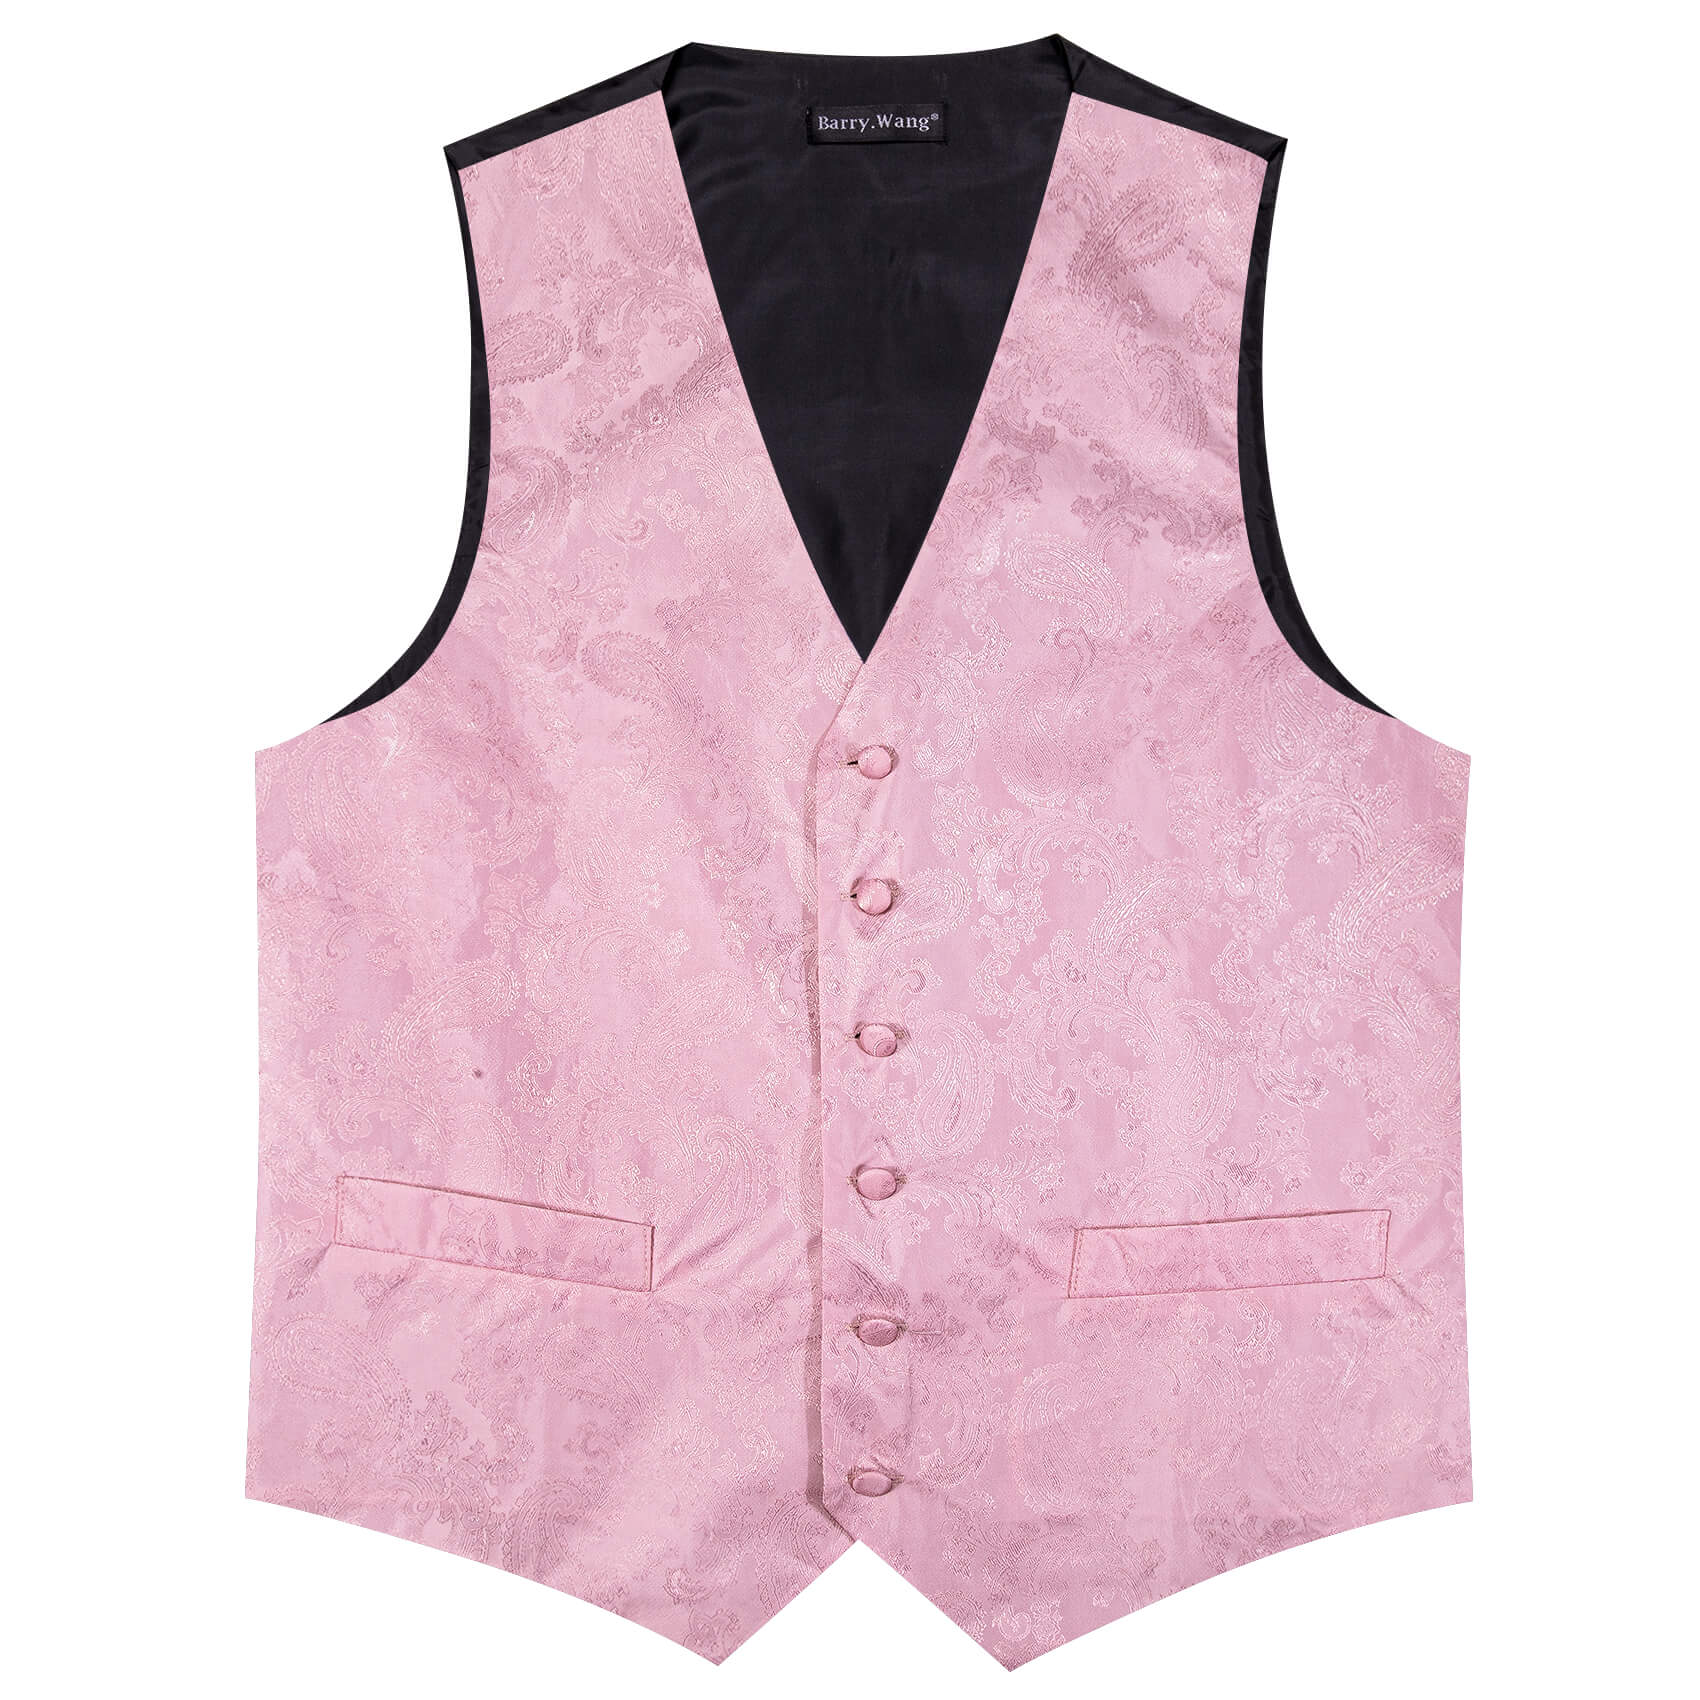 Barry Wang 5pcs Mens Waistcoat Set Pink Paisley Vest